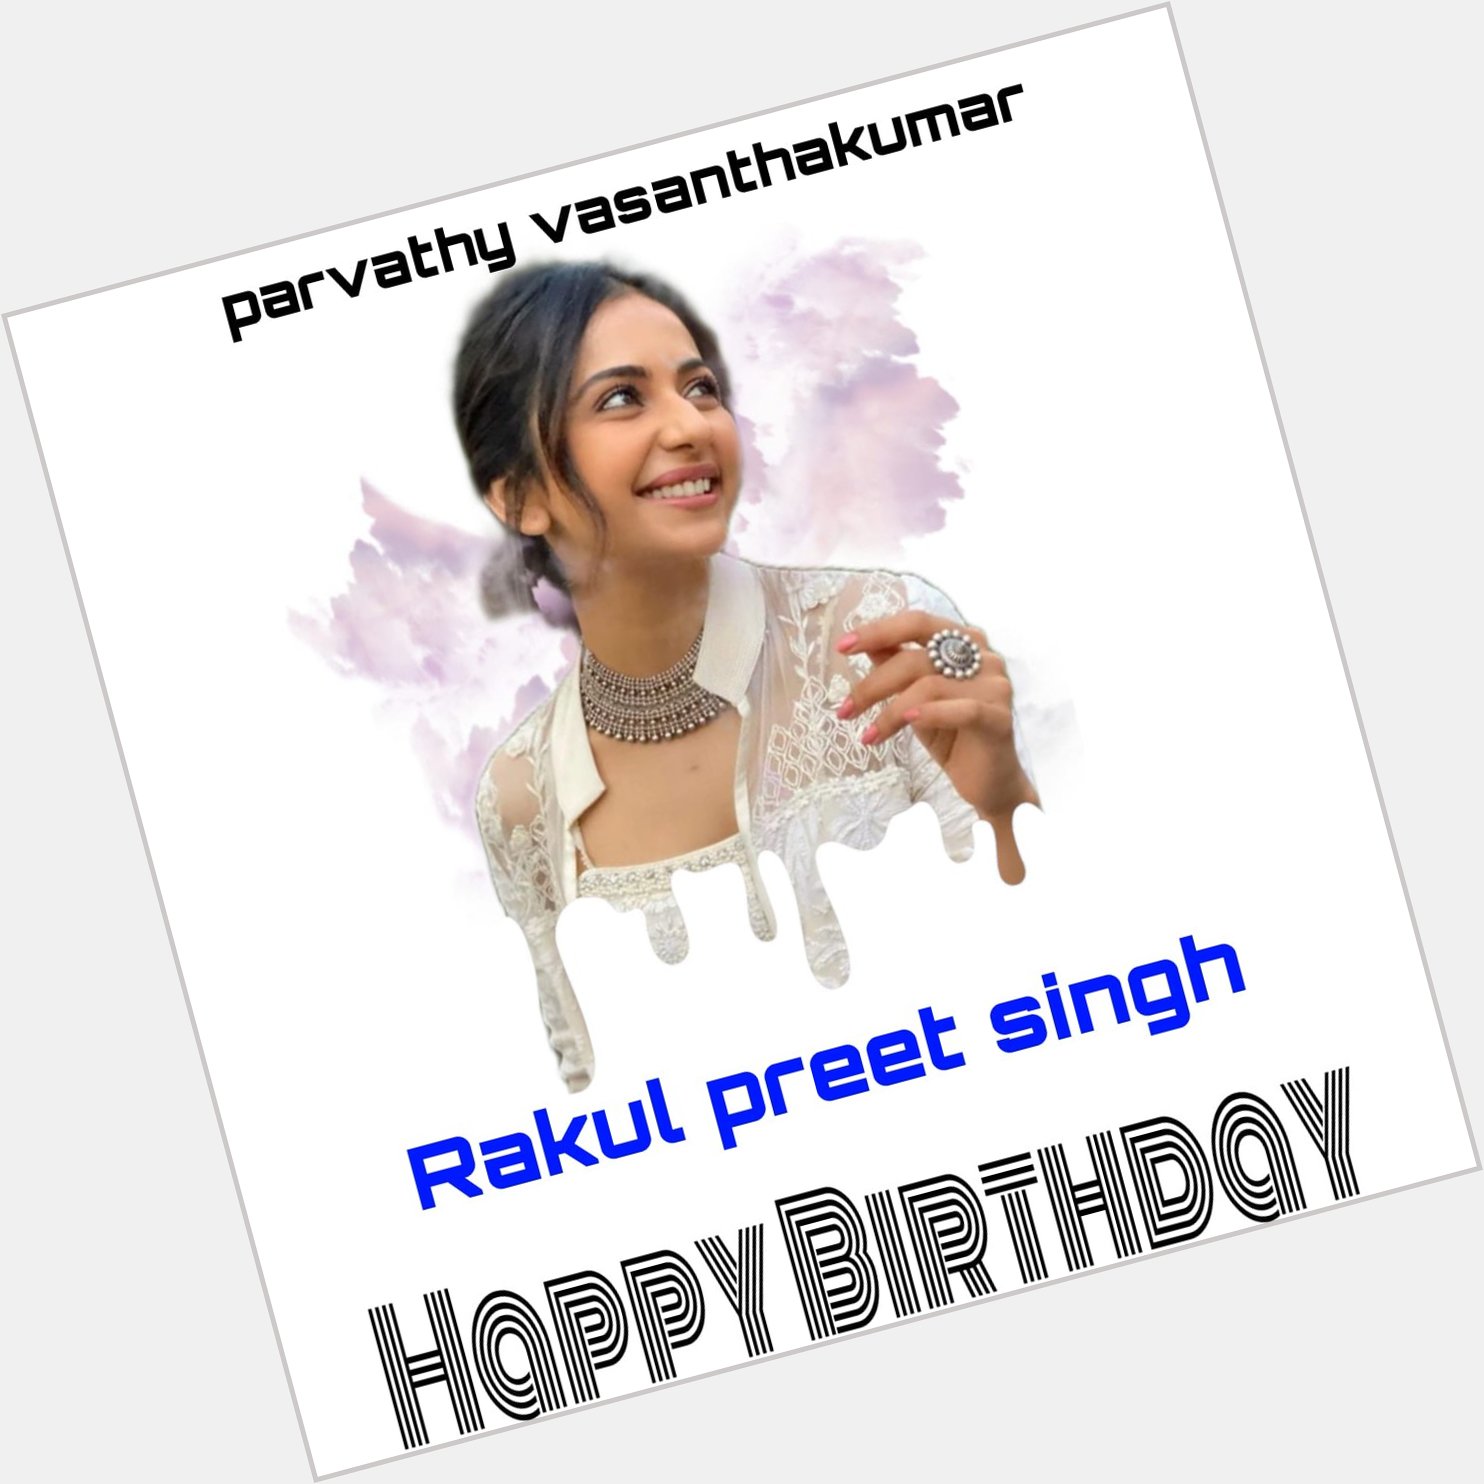 Happy Birthday Rakul preet Singh   